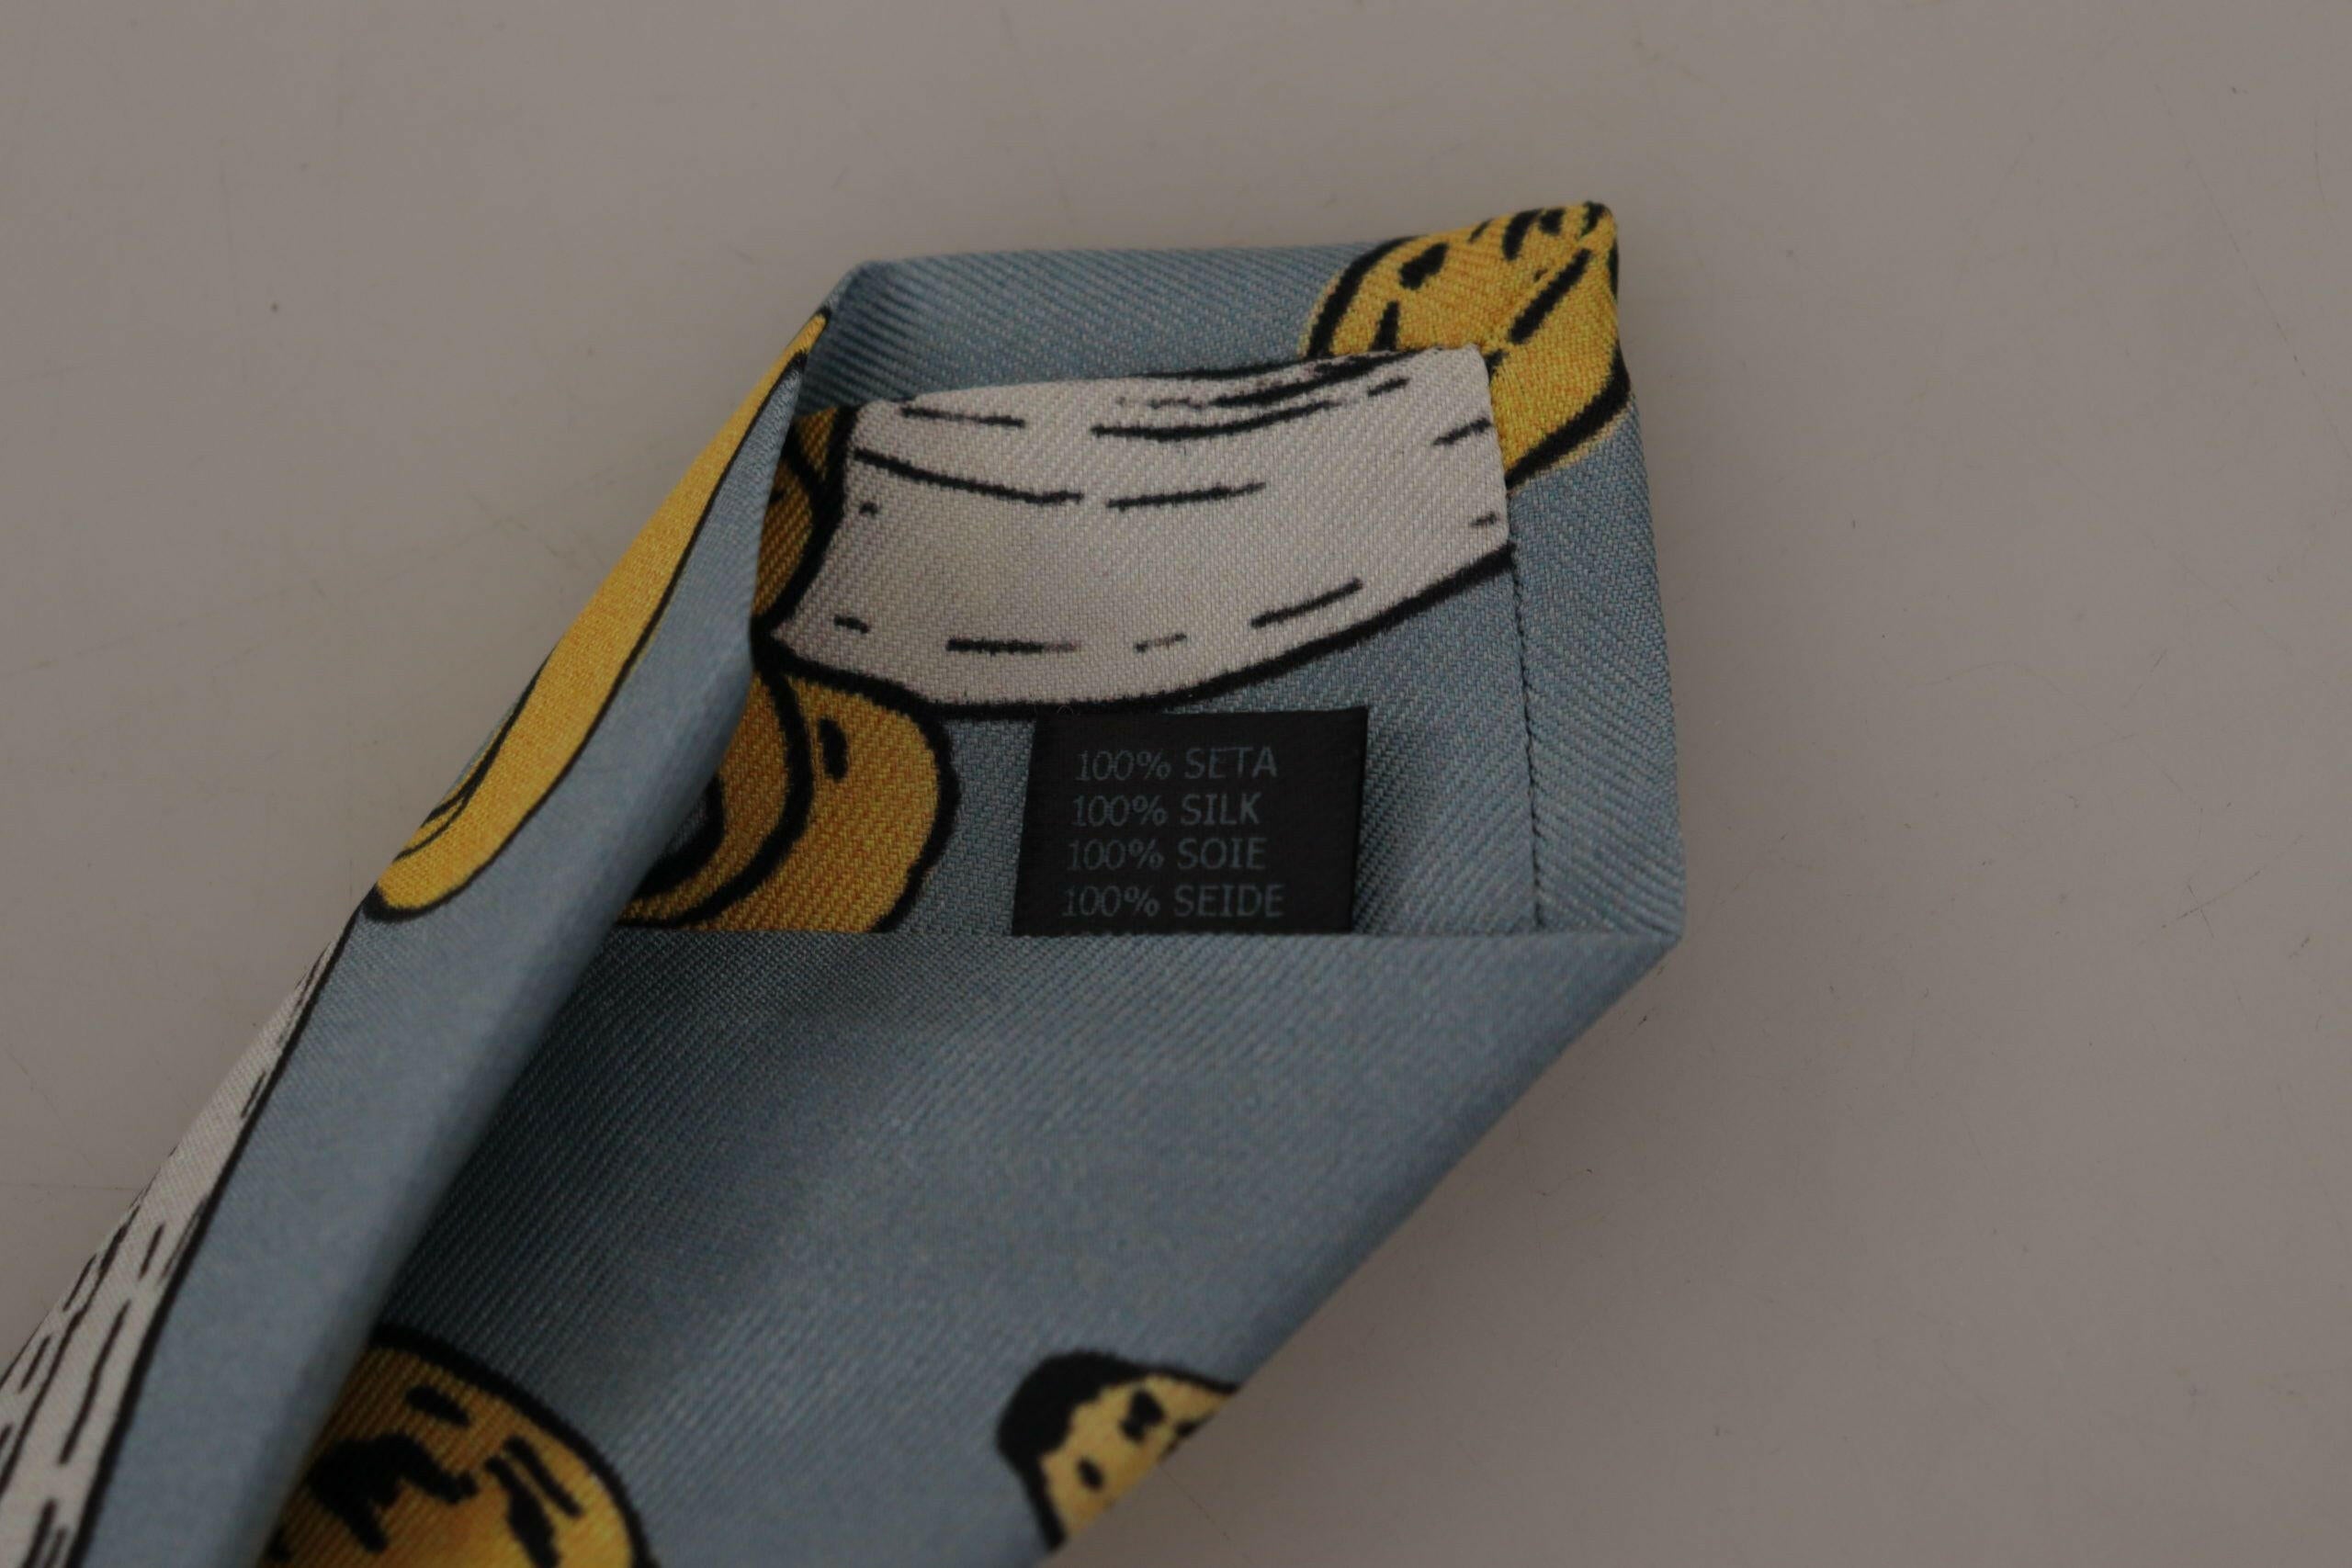 Dolce & Gabbana Blue Yellow Banana Print Necktie Accessory 100%Silk  Tie - GENUINE AUTHENTIC BRAND LLC  